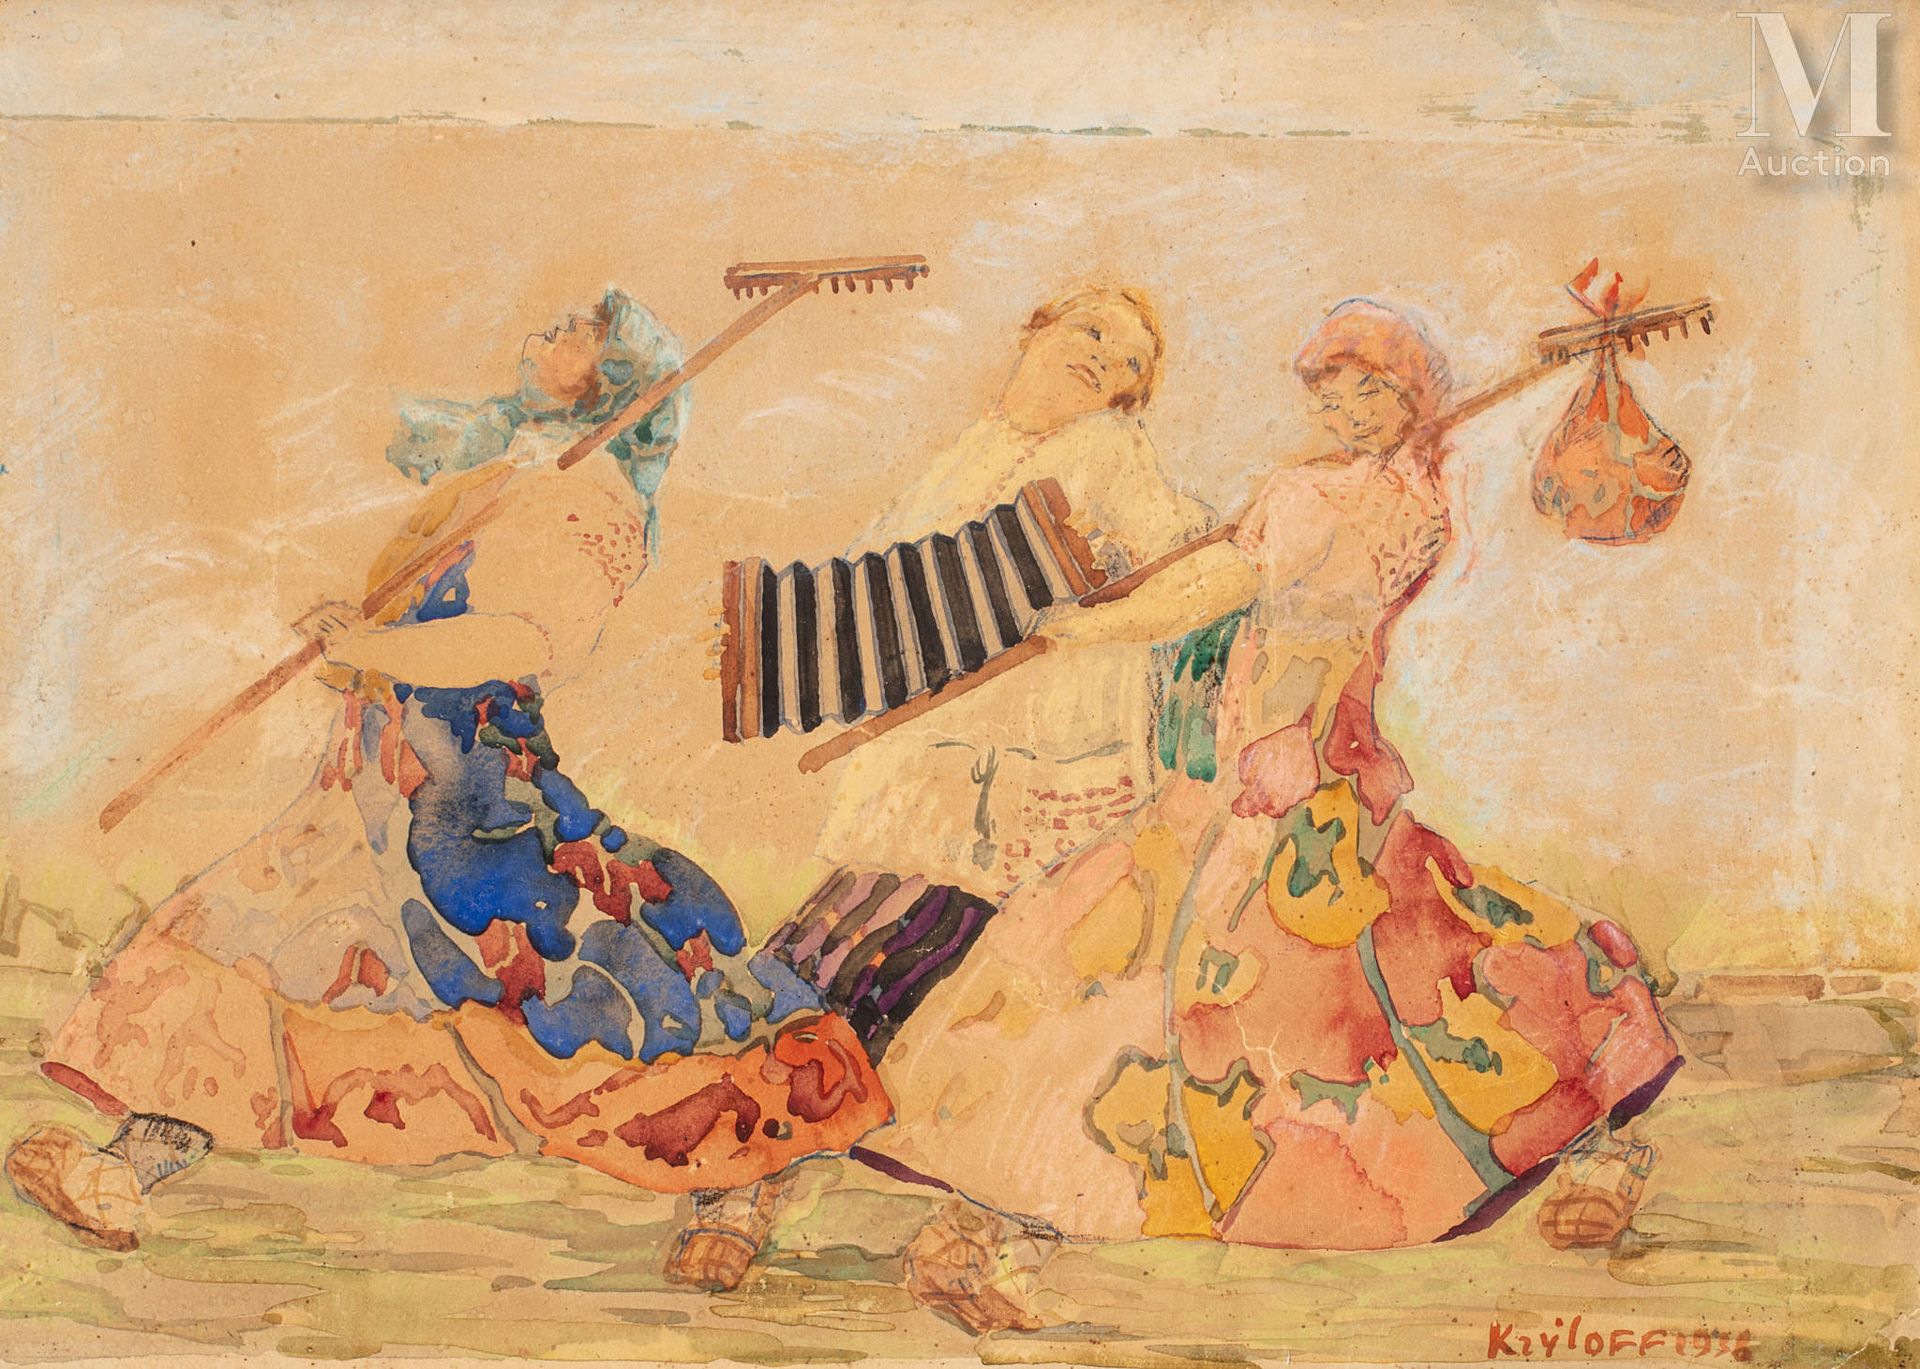 Boris KRYLOFF (Moscou 1891 - Copenhague 1977) The bandoneon player and the peasa&hellip;